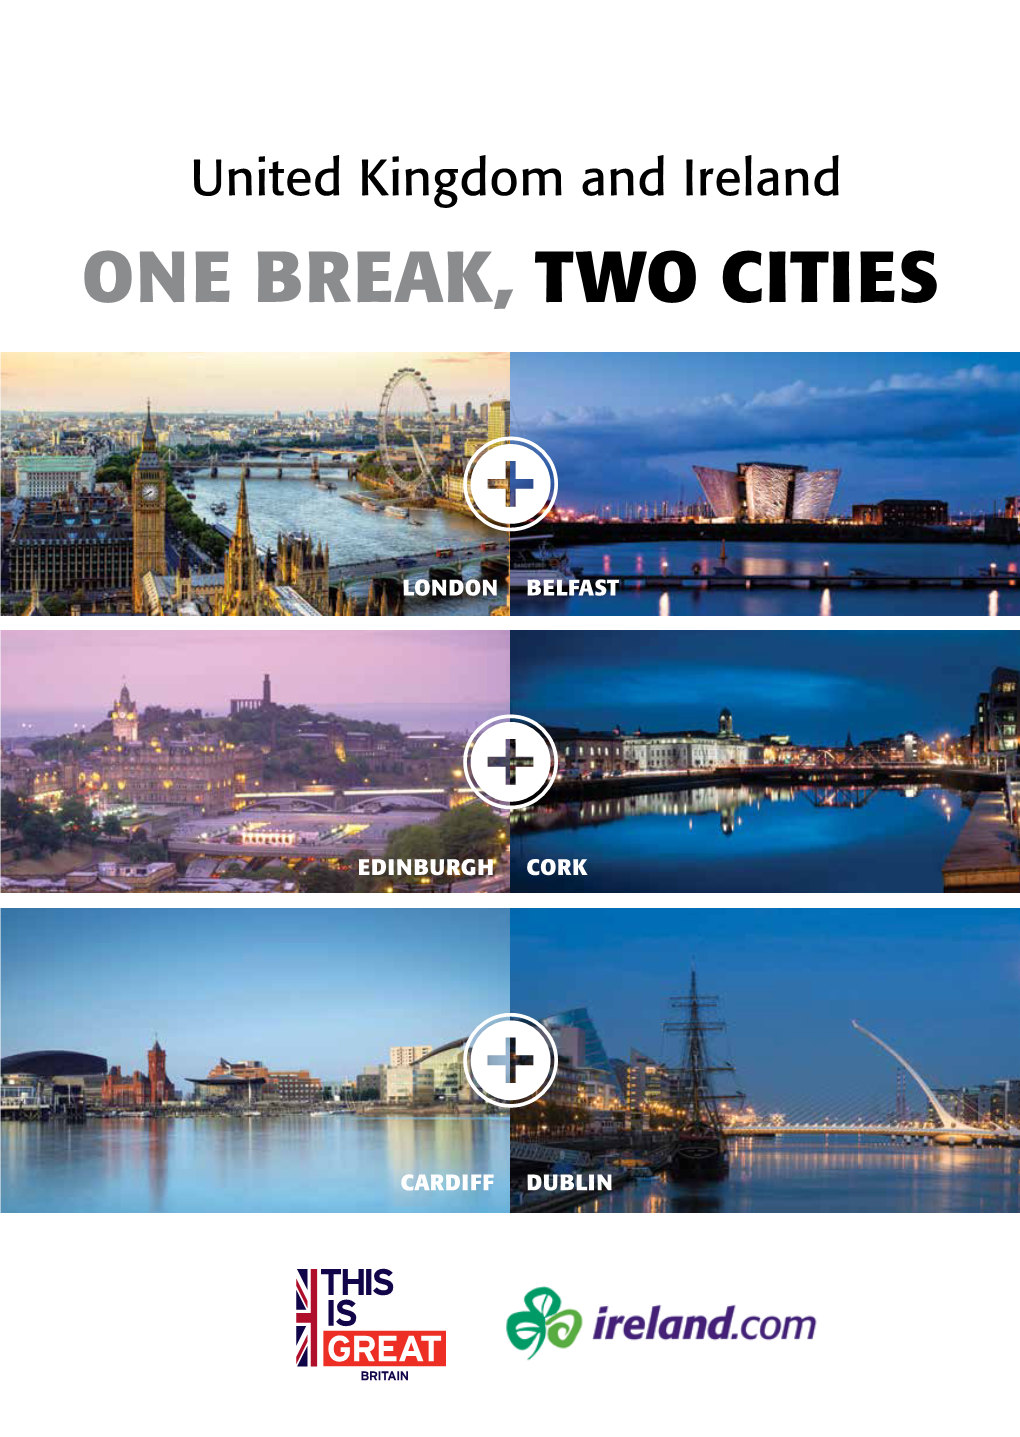 One Break, Two Cities